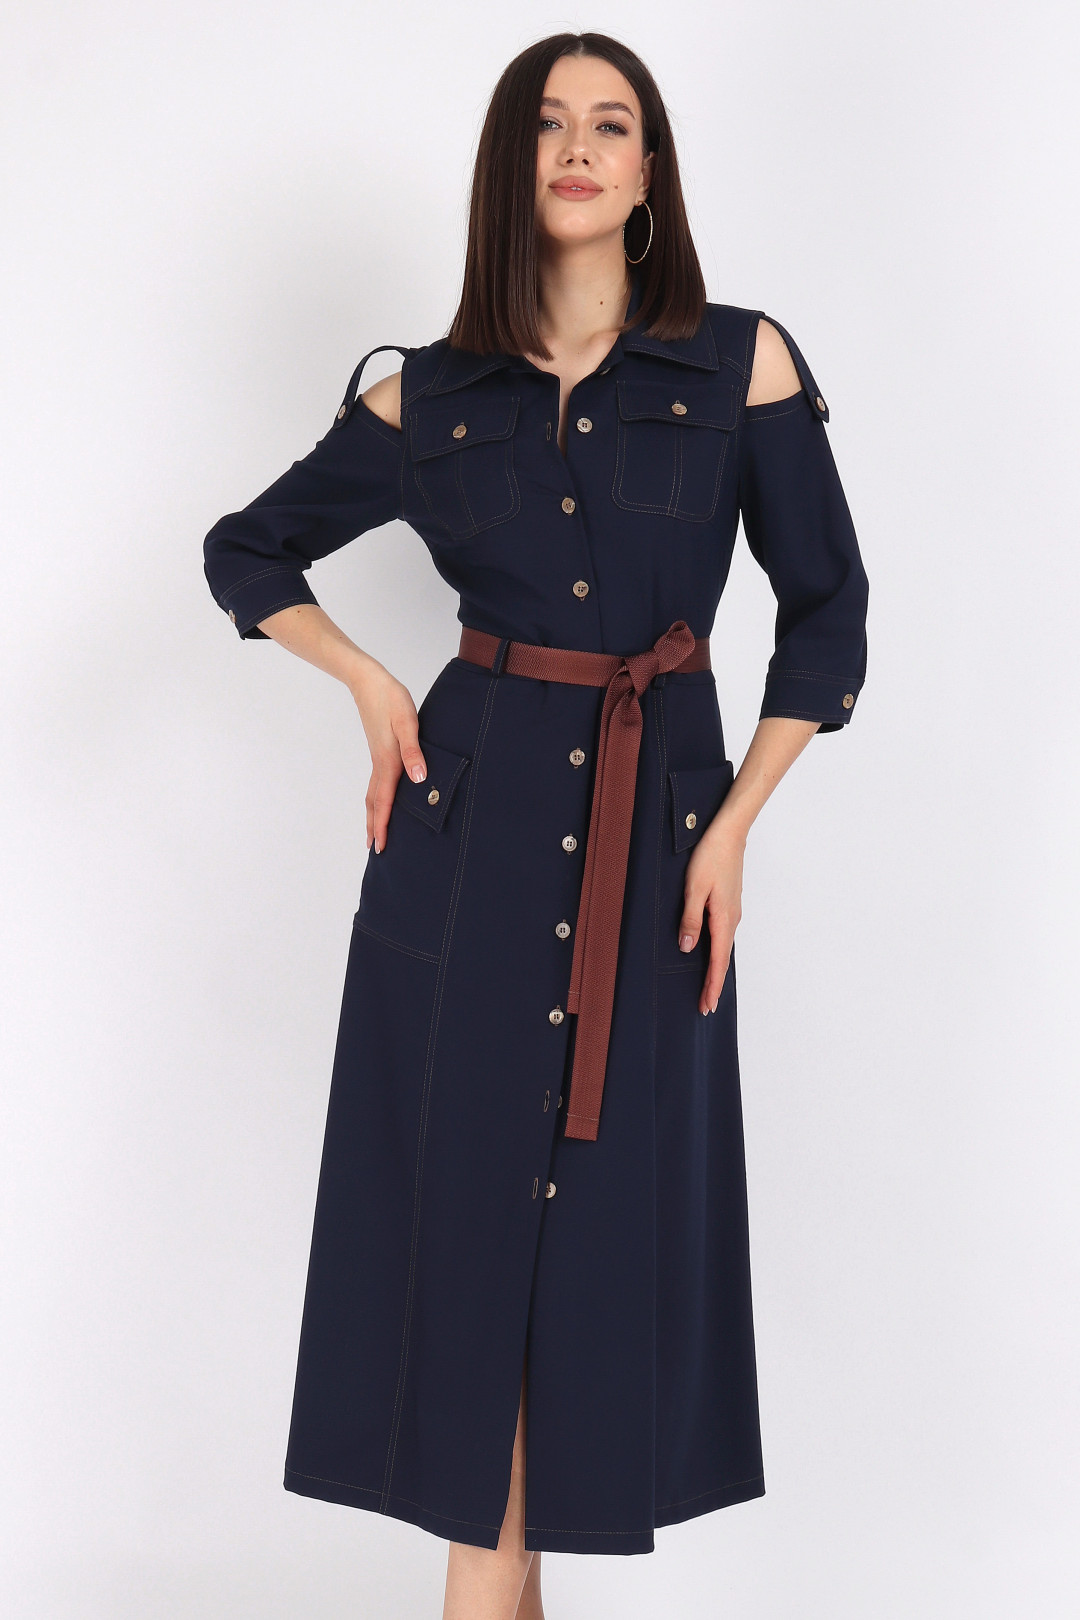 Платье МиА-Мода 1551 темно-синий